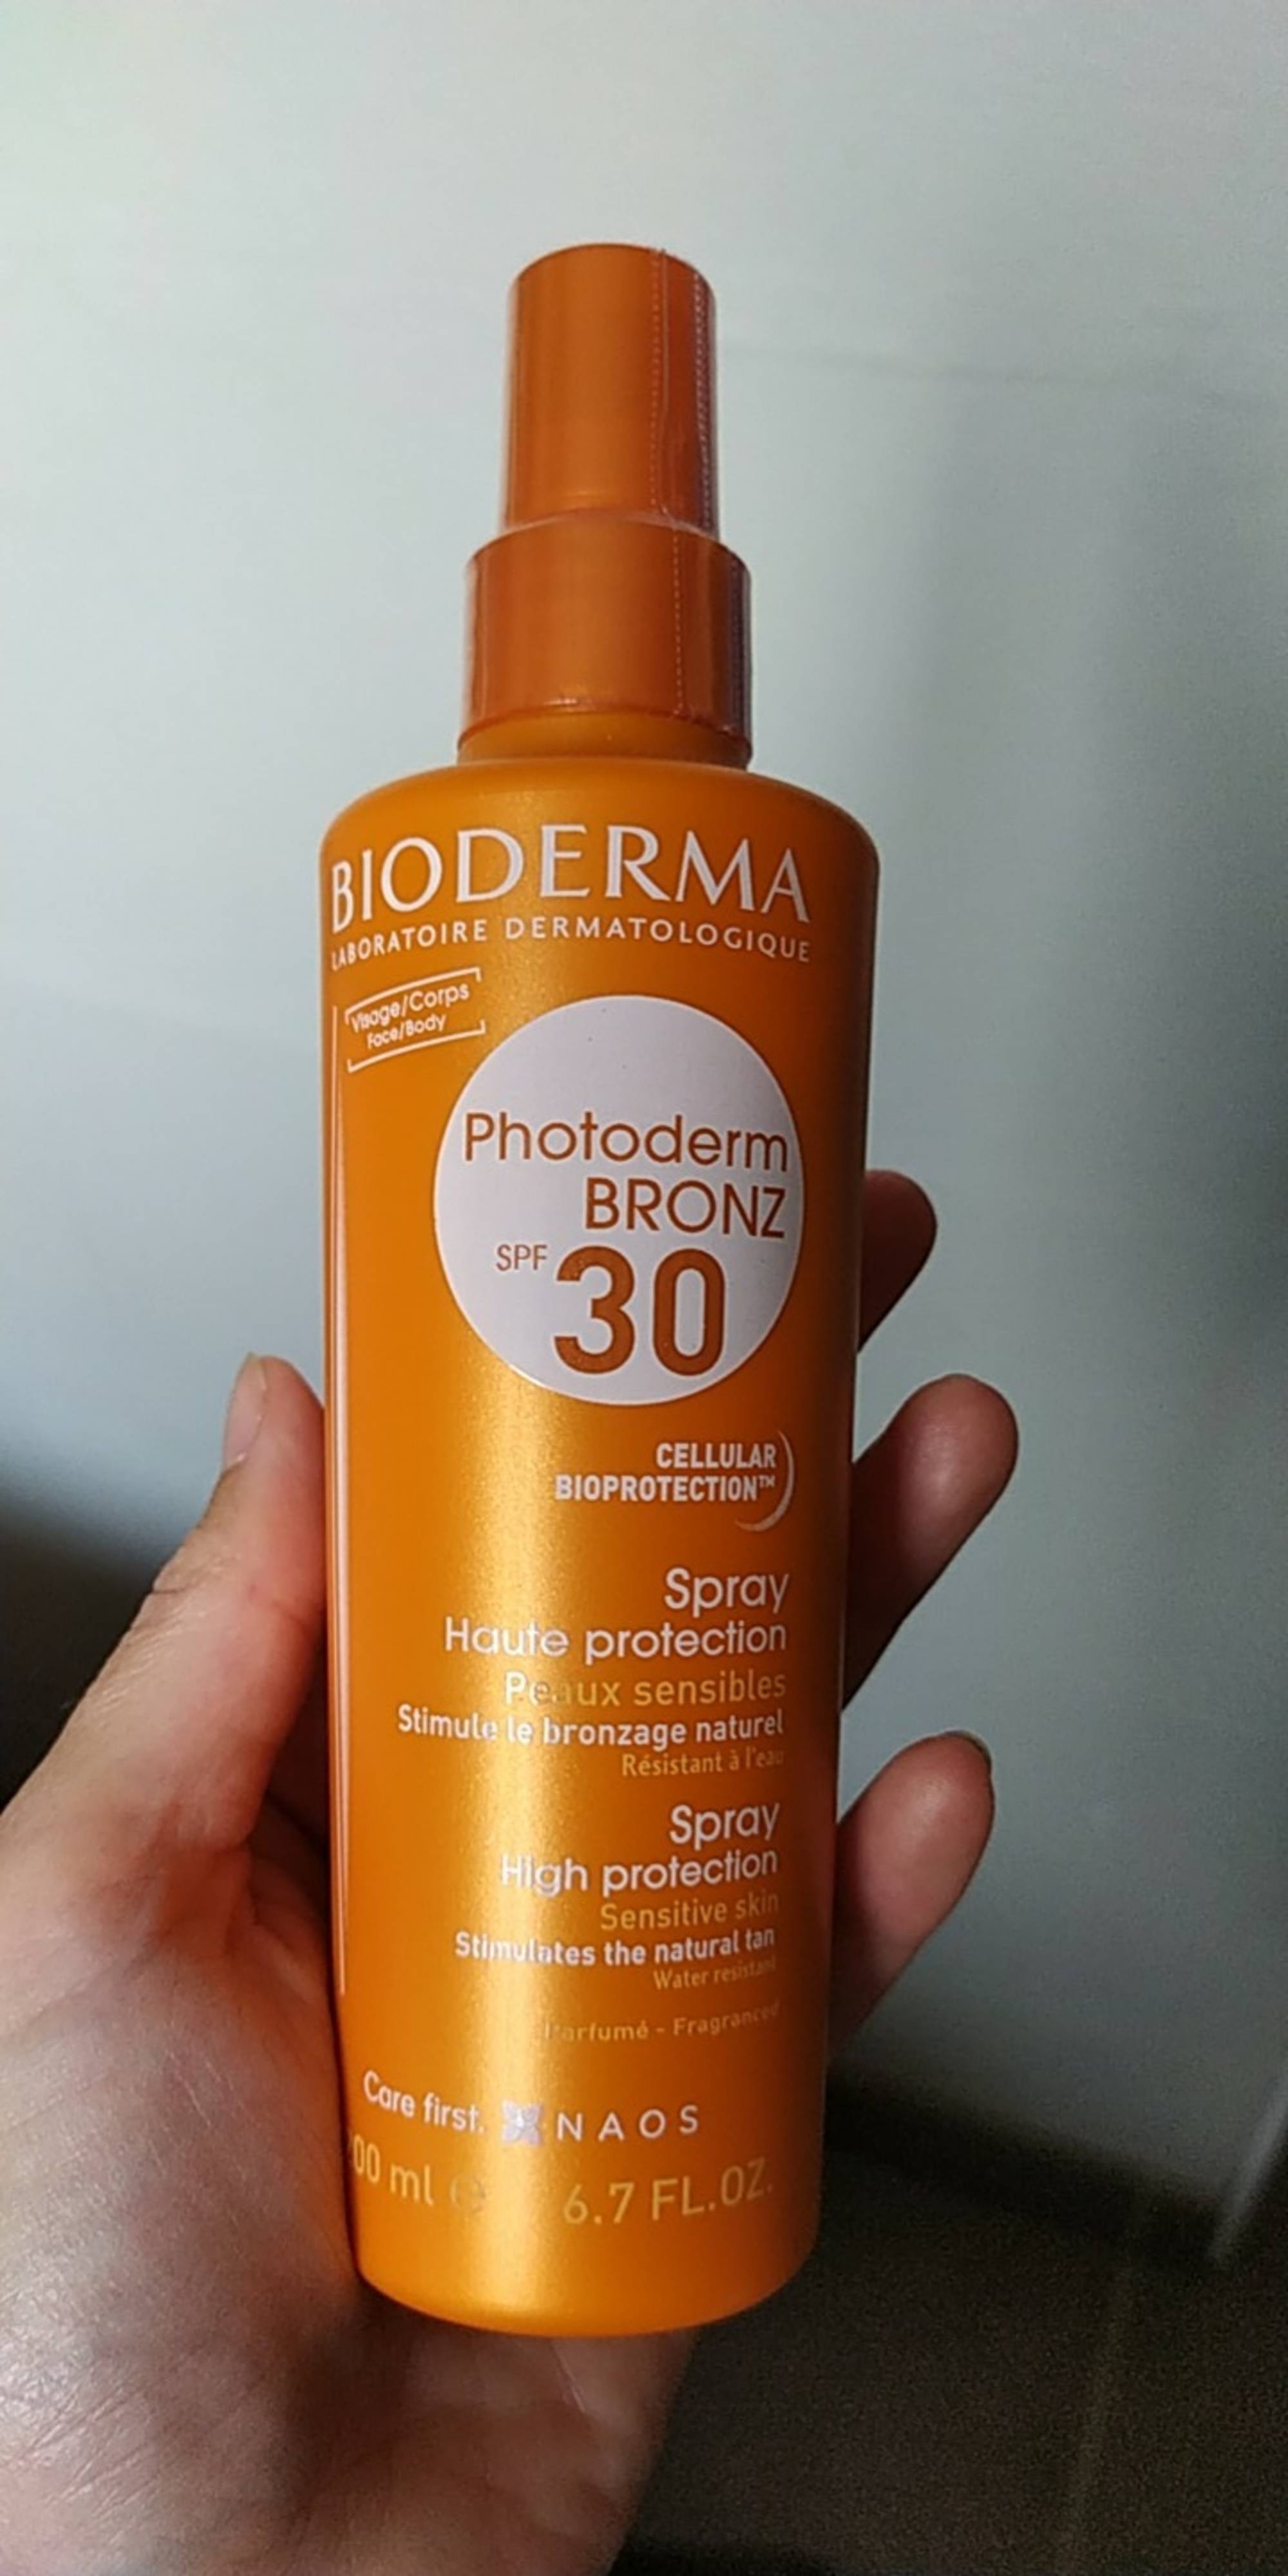 BIODERMA - Photoderm bronz - Spray haut protection SPF 30